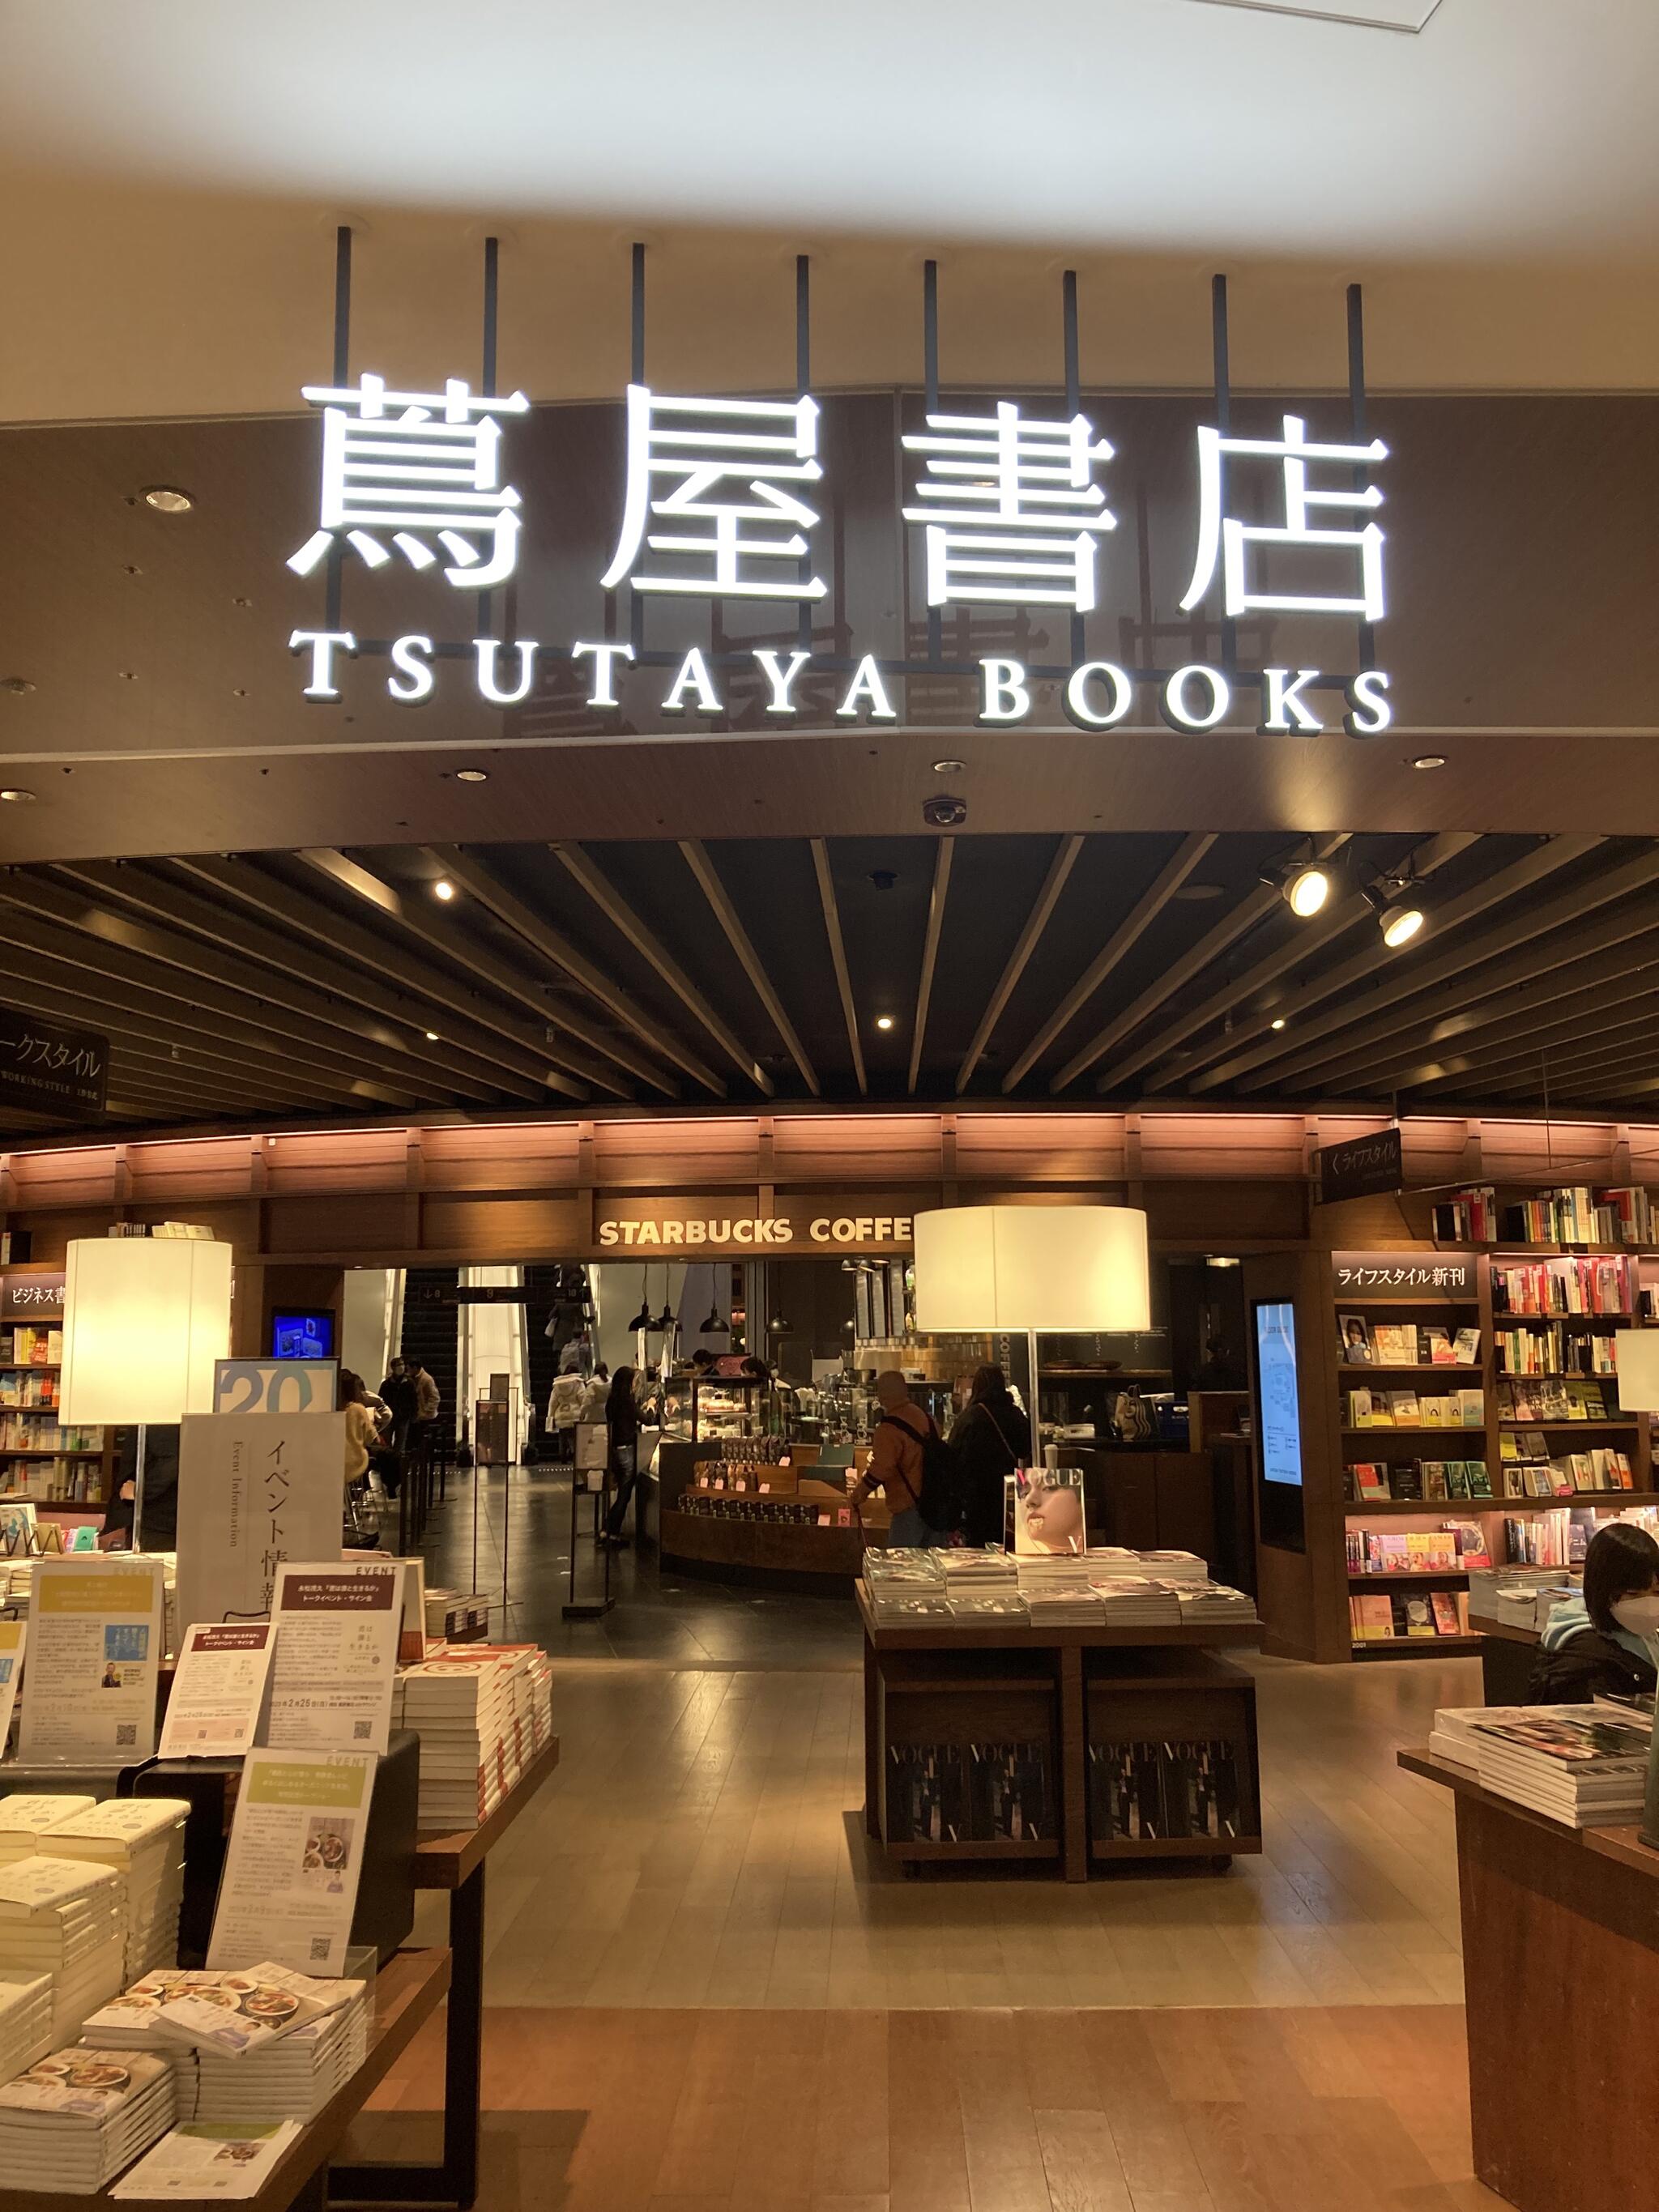 TSUTAYA BOOK 梅田 蔦屋書店の代表写真1